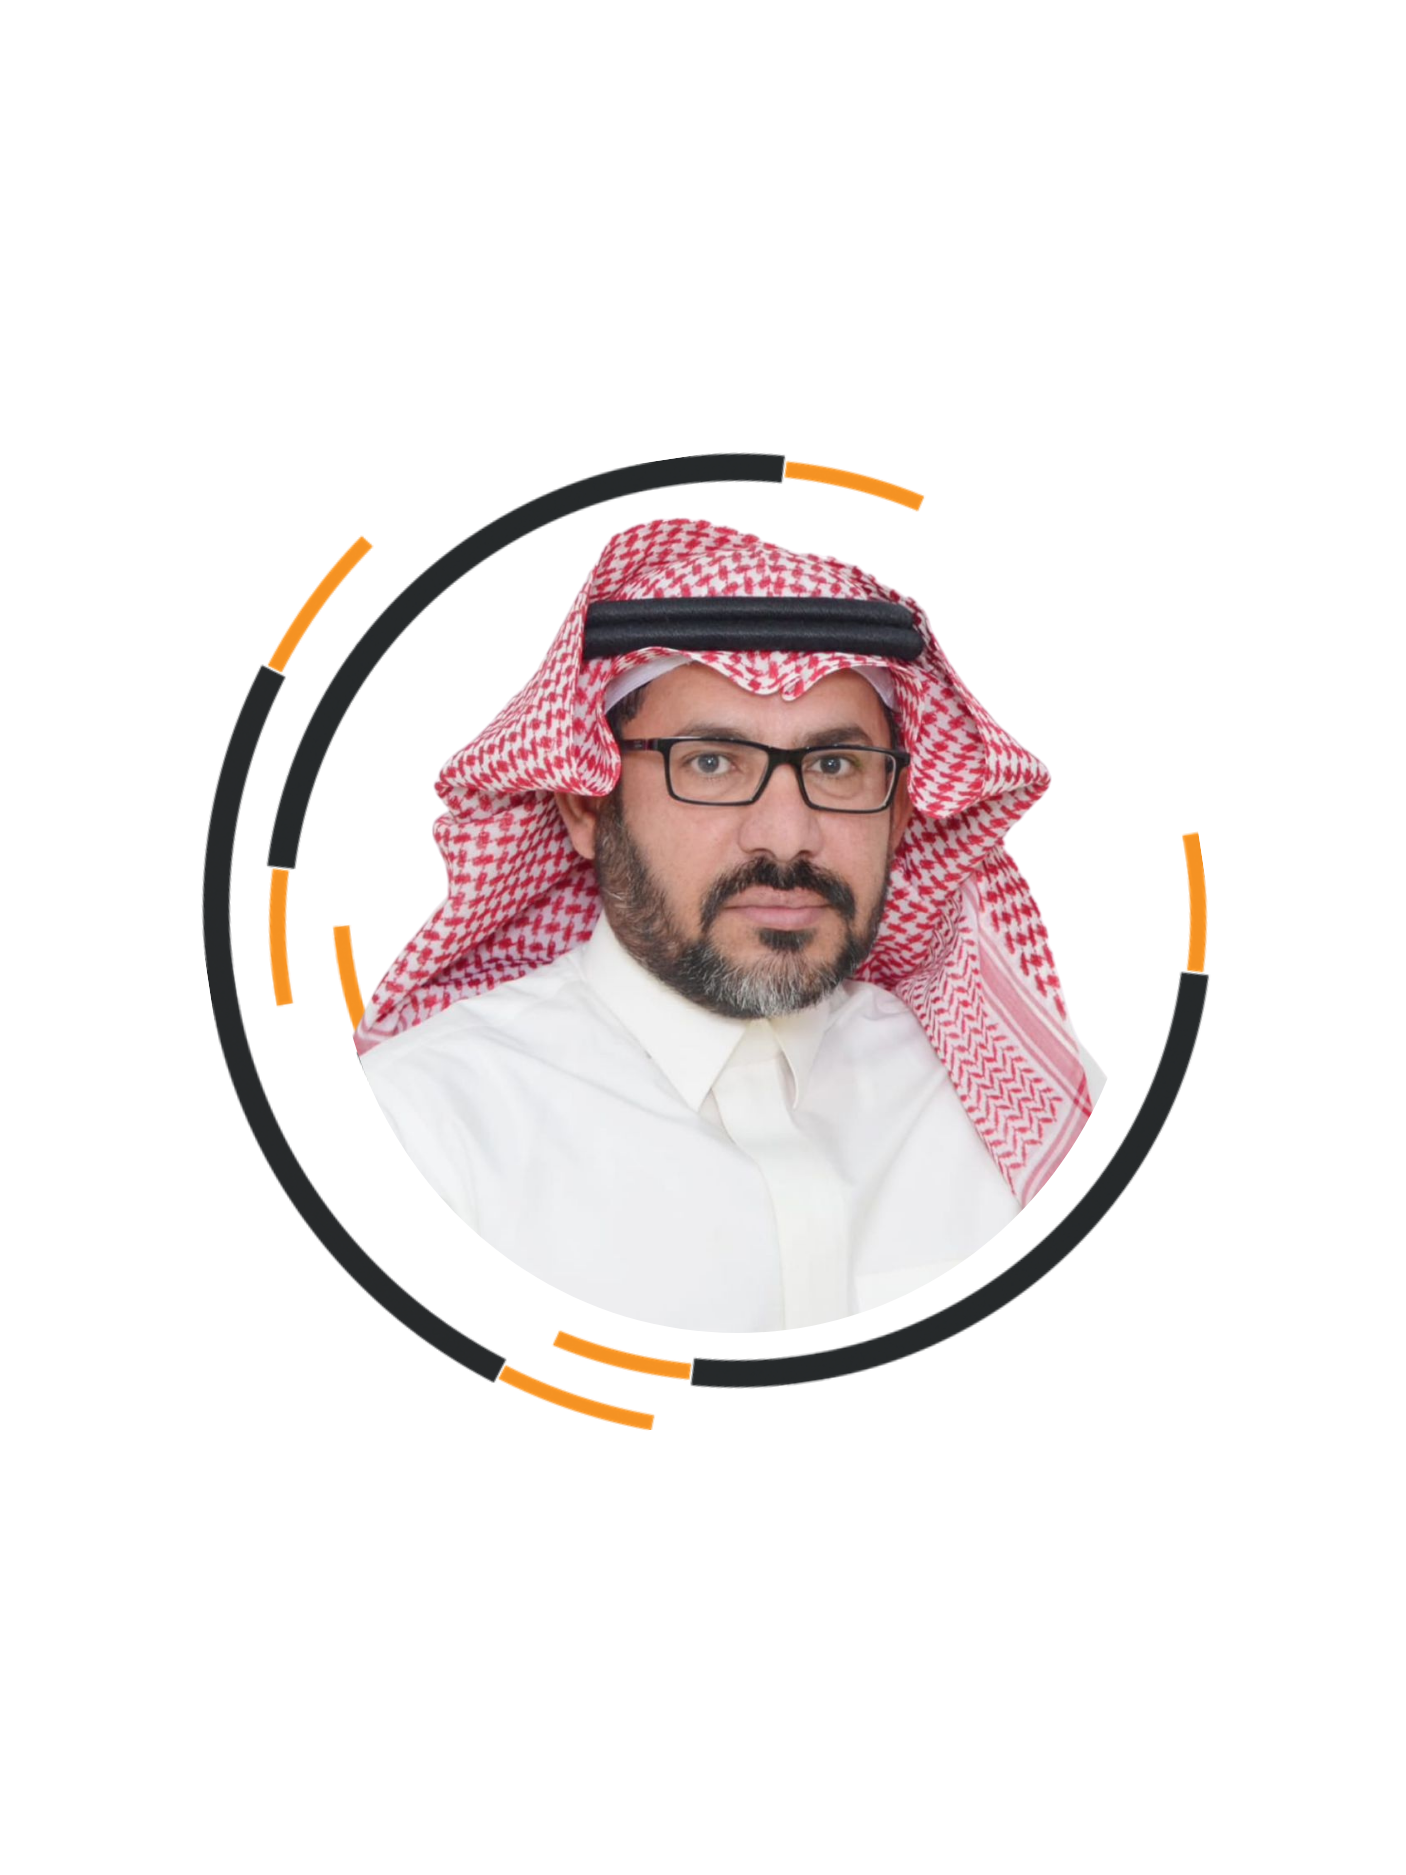 Dr. Saif bin Faheed Al-Harbi